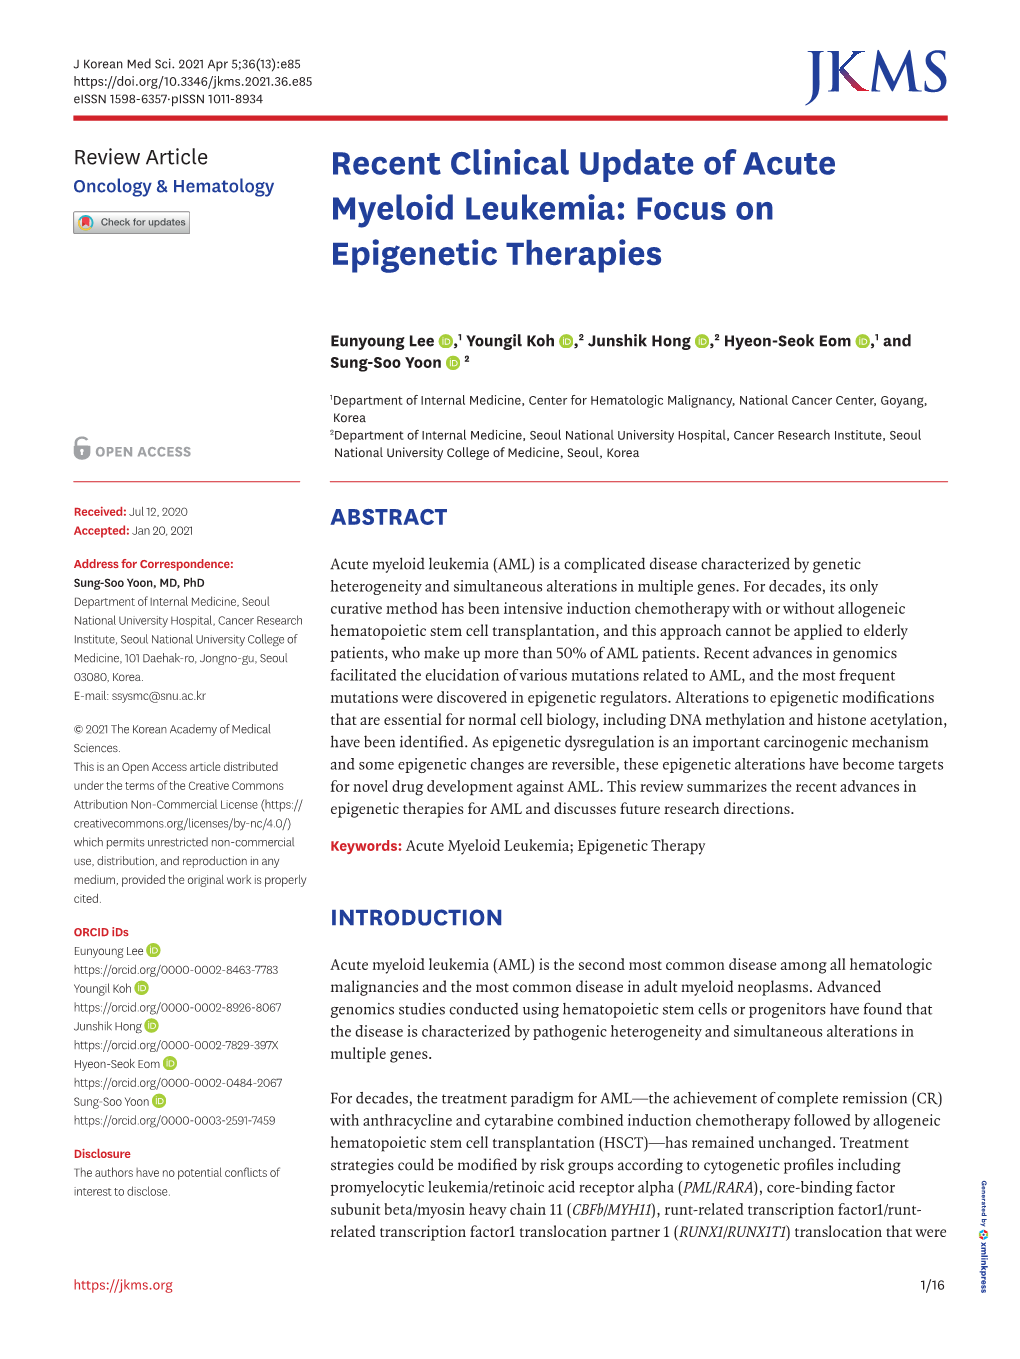 Recent Clinical Update of Acute Myeloid Leukemia